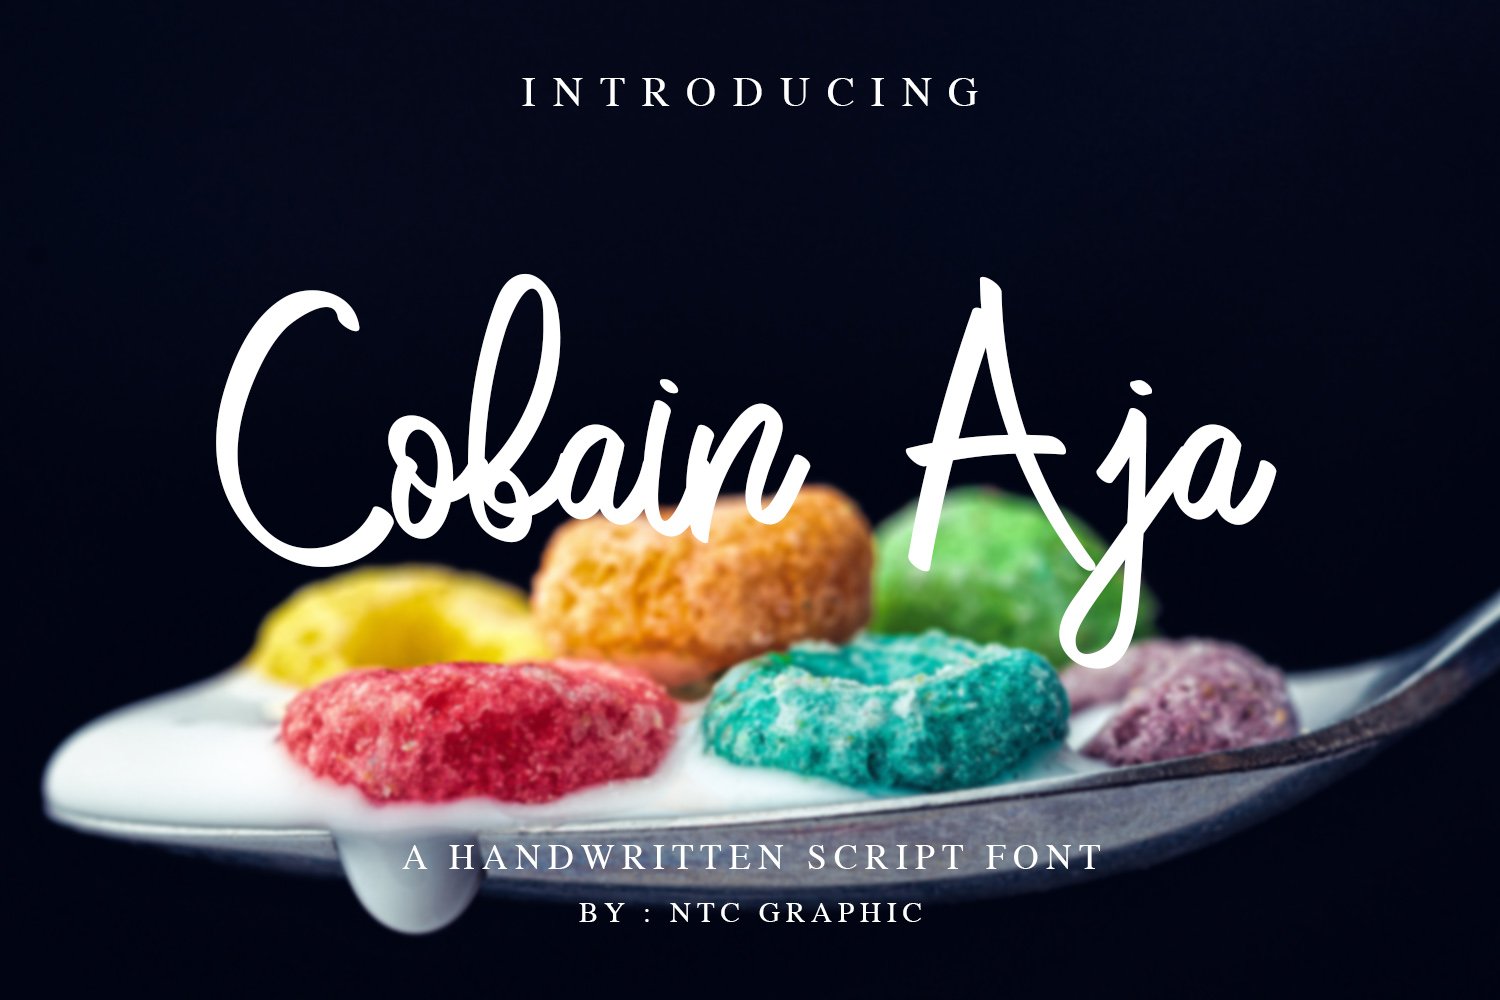 Cobain Aja - Script Font cover image.